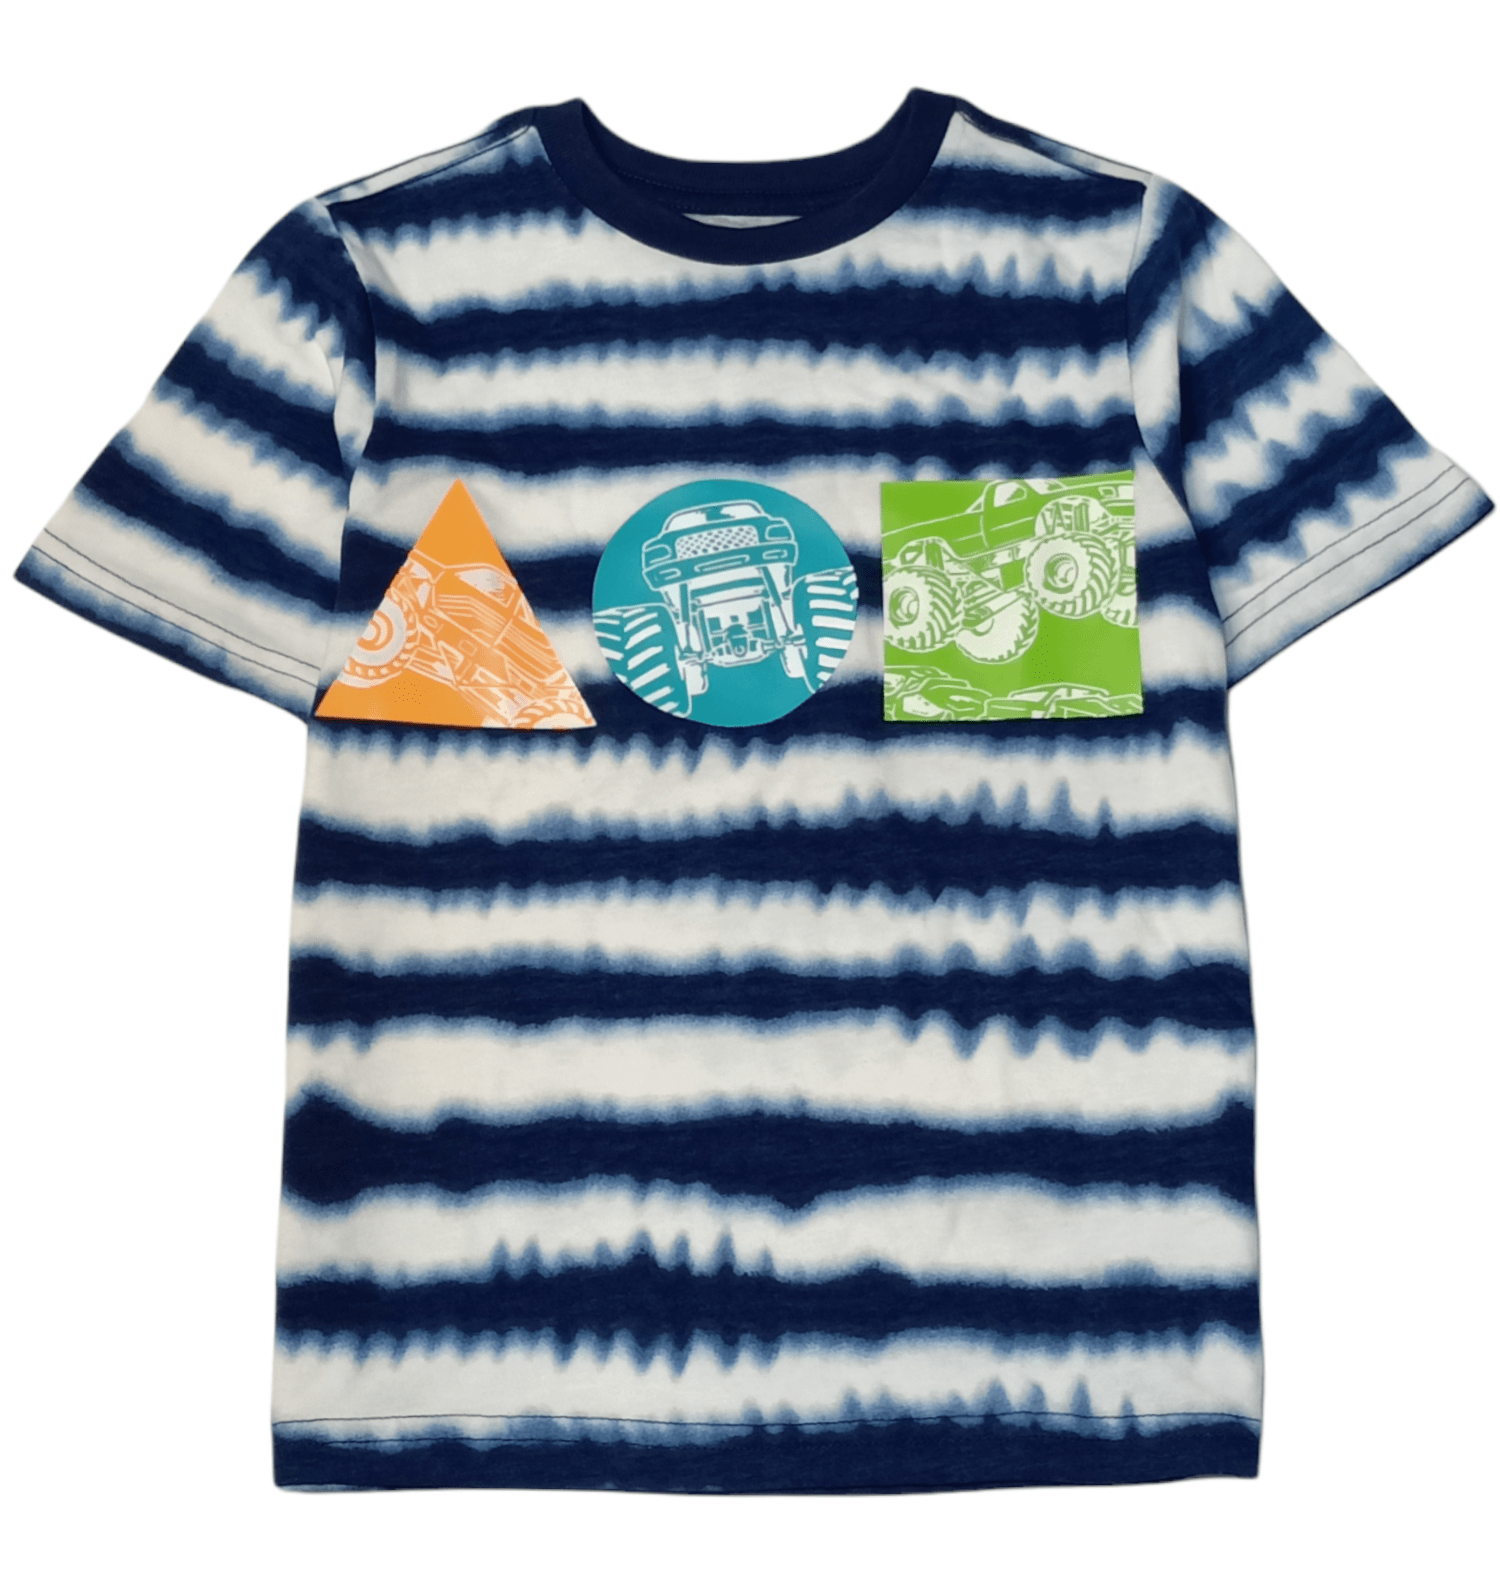 ElOutlet-Sumer Kids Kids Tshirt Boys Tshirt - 365 Kids - Tie Dye (Dark Blue x White)